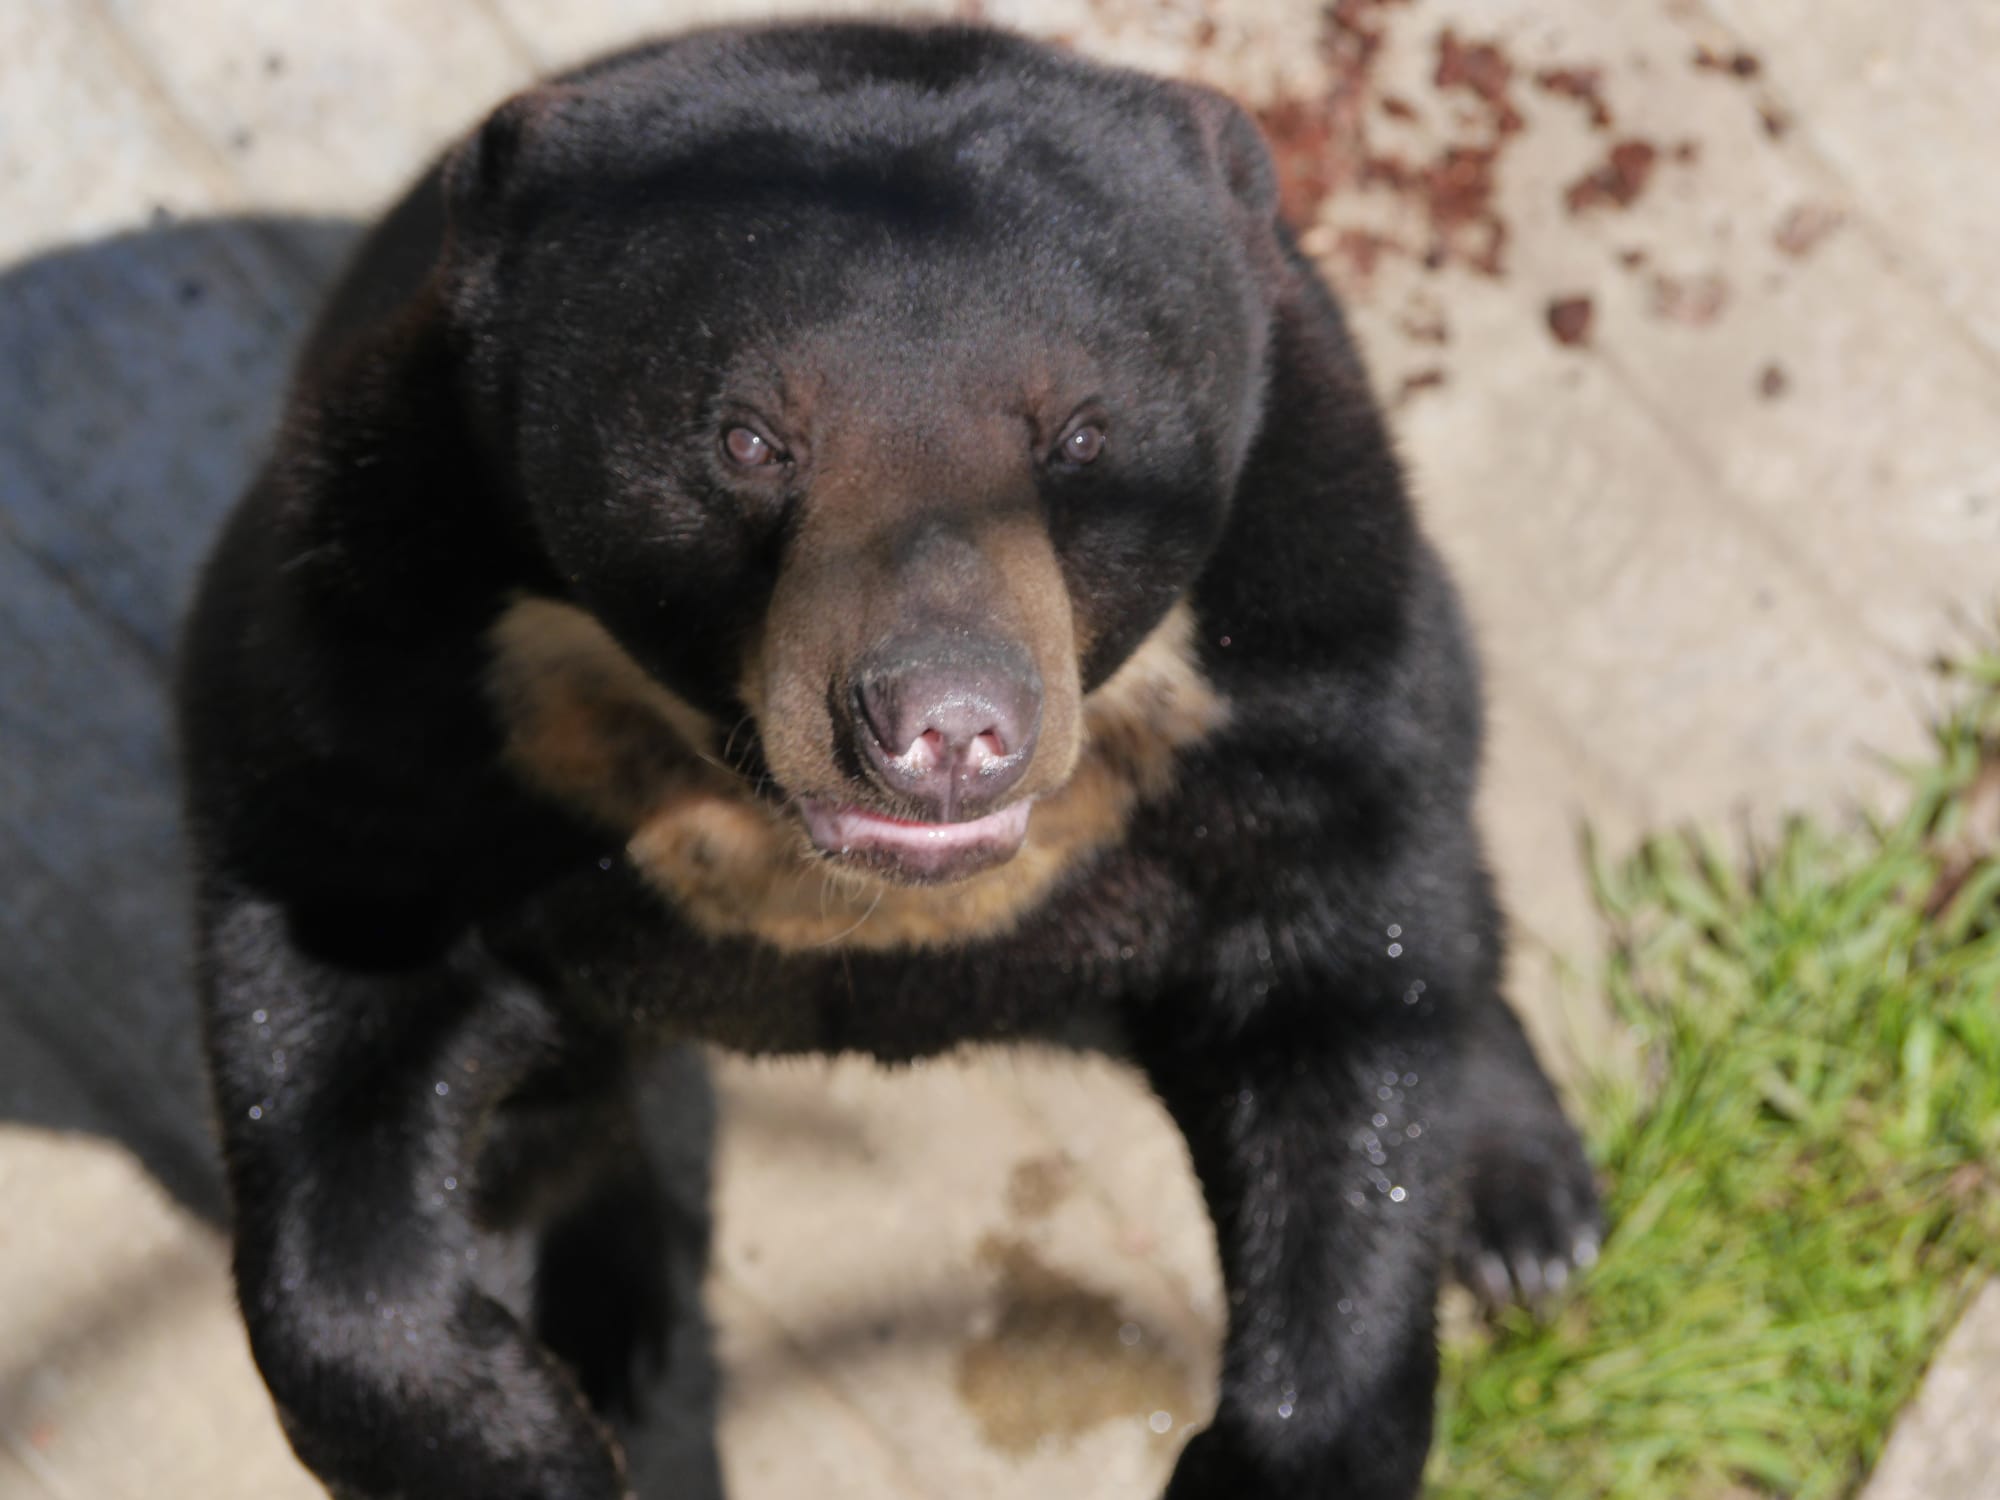 Photo by Author — bear— The Zoo, Johor Bahru, Johor, Malaysia